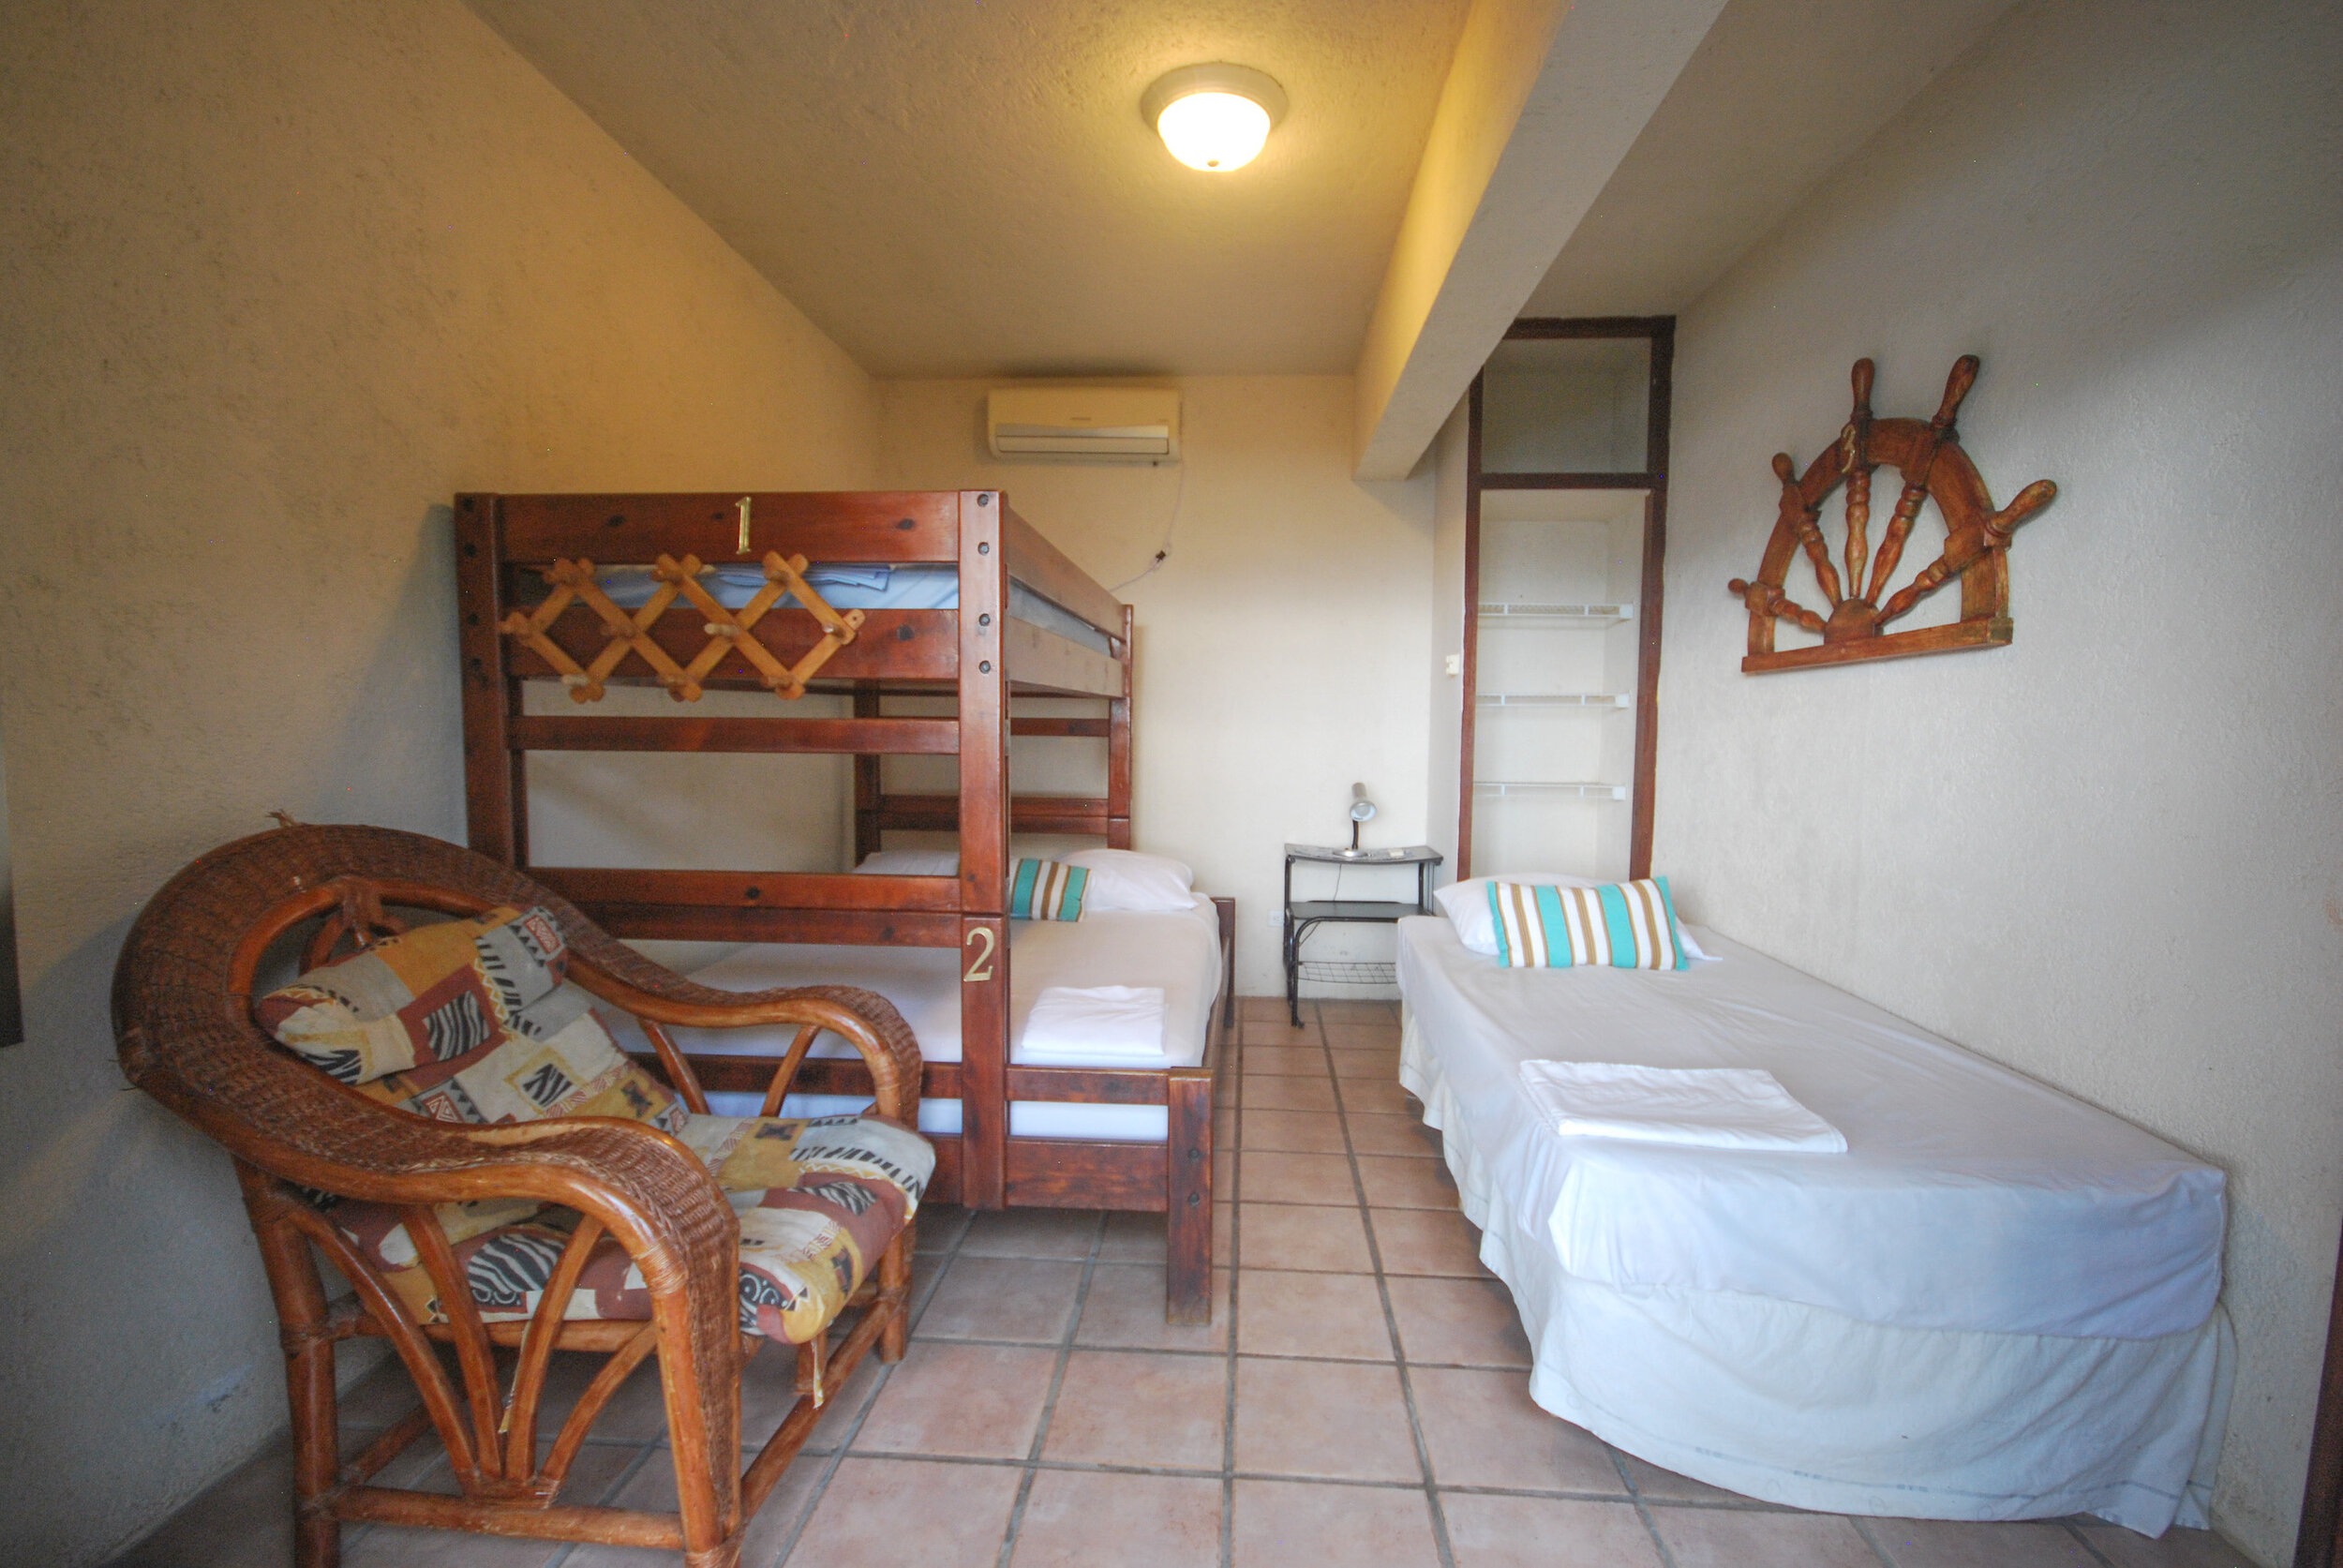 Hotel Resort For Sale San Juan Del Sur Nicaragua 34.JPEG